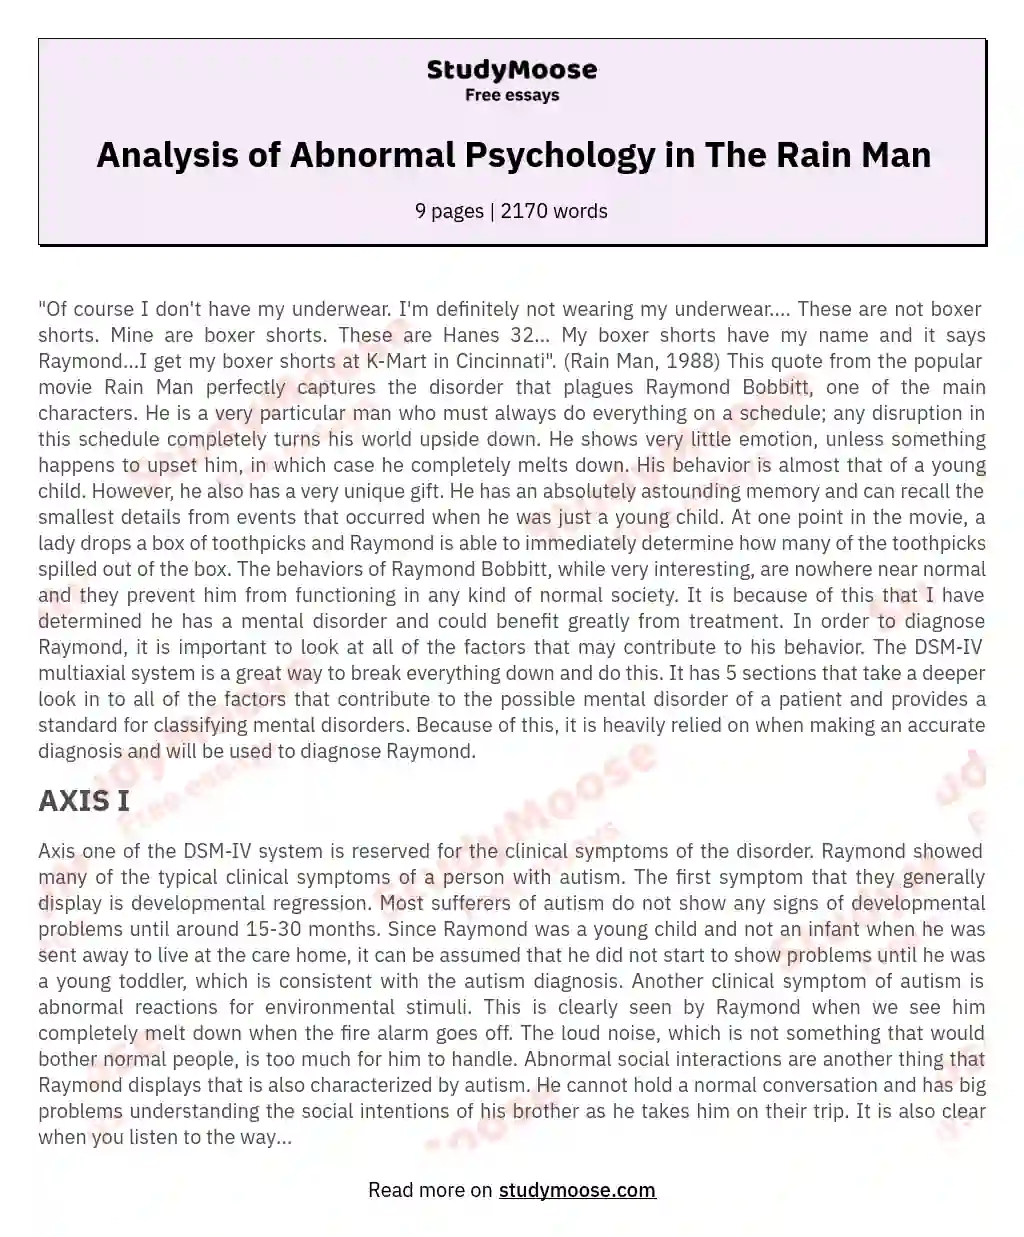 Analysis of Abnormal Psychology in The Rain Man